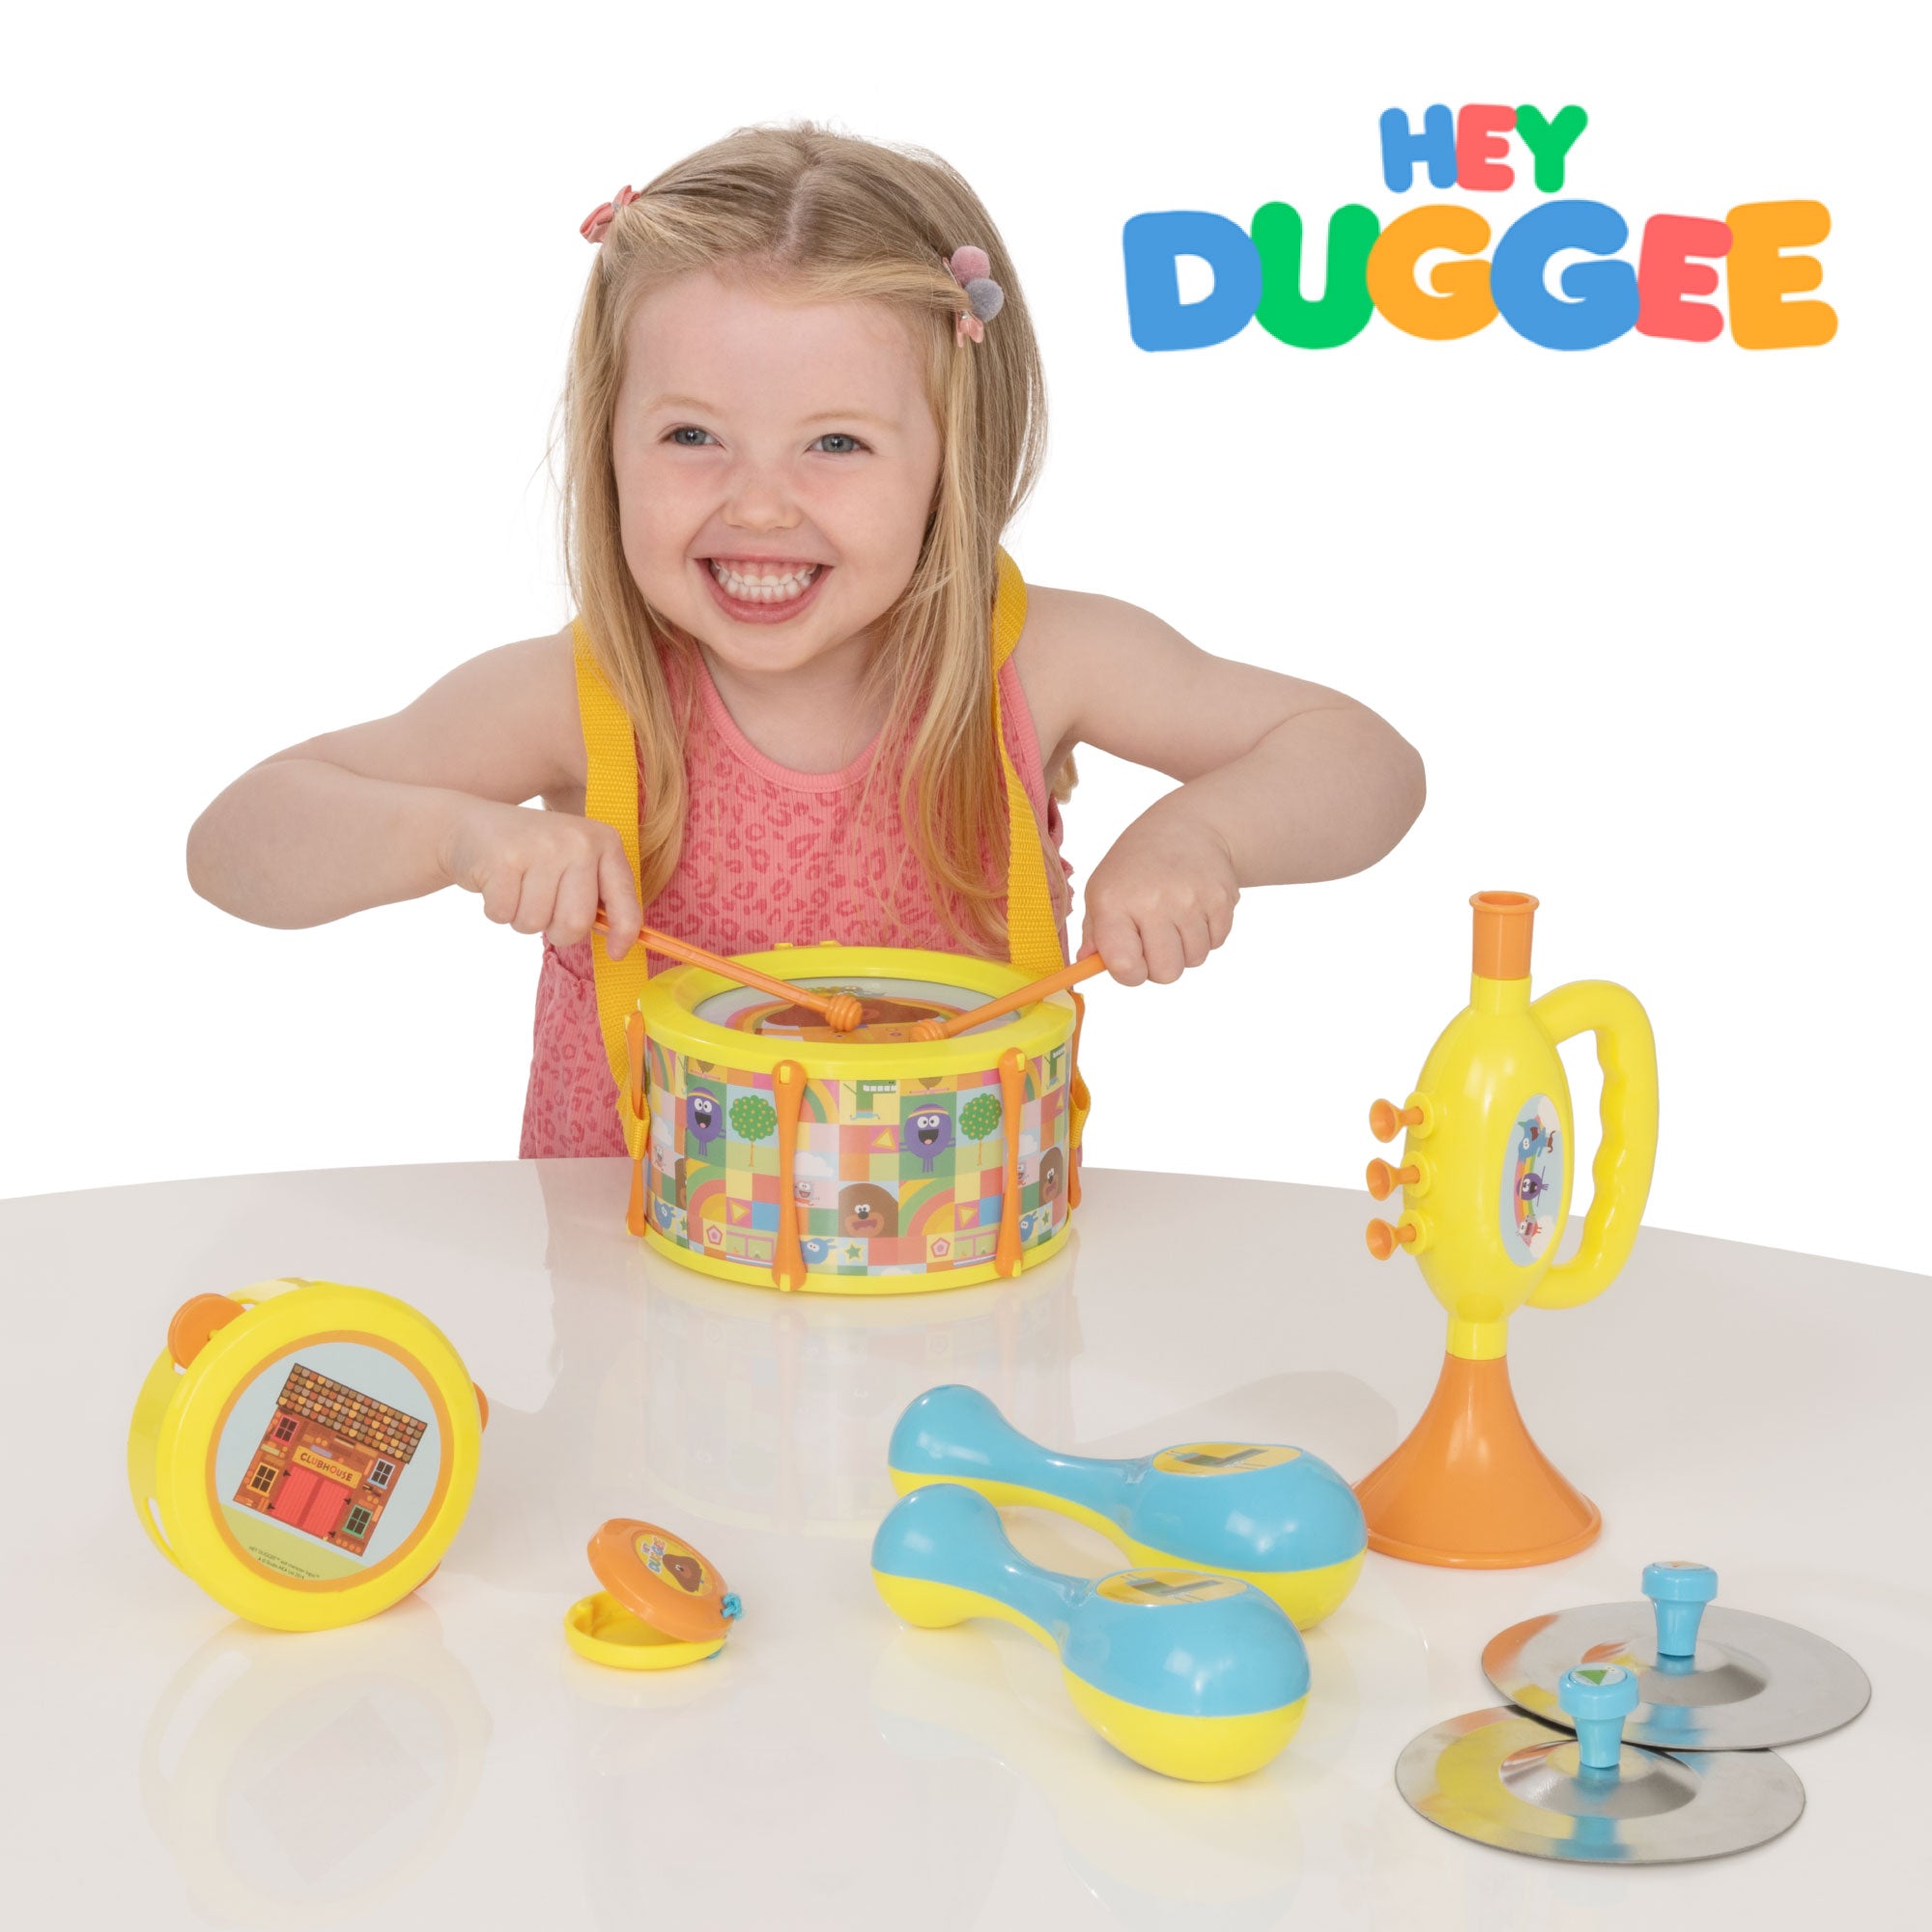 hey duggee toy band set